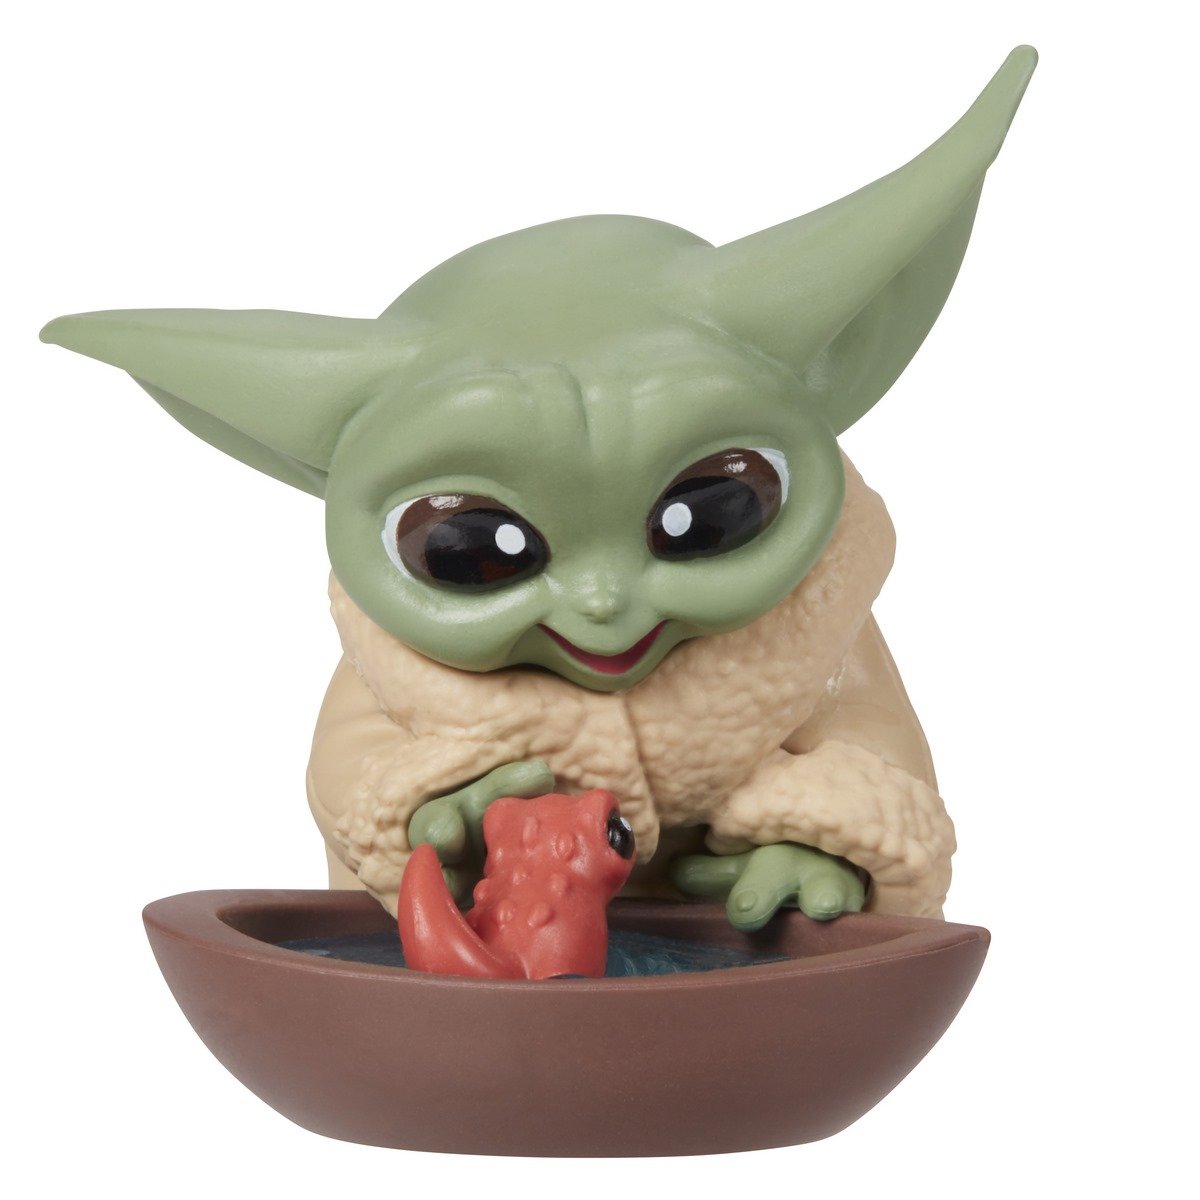 Grogu Star Wars Mandalorian - figurine à collectionner série 4